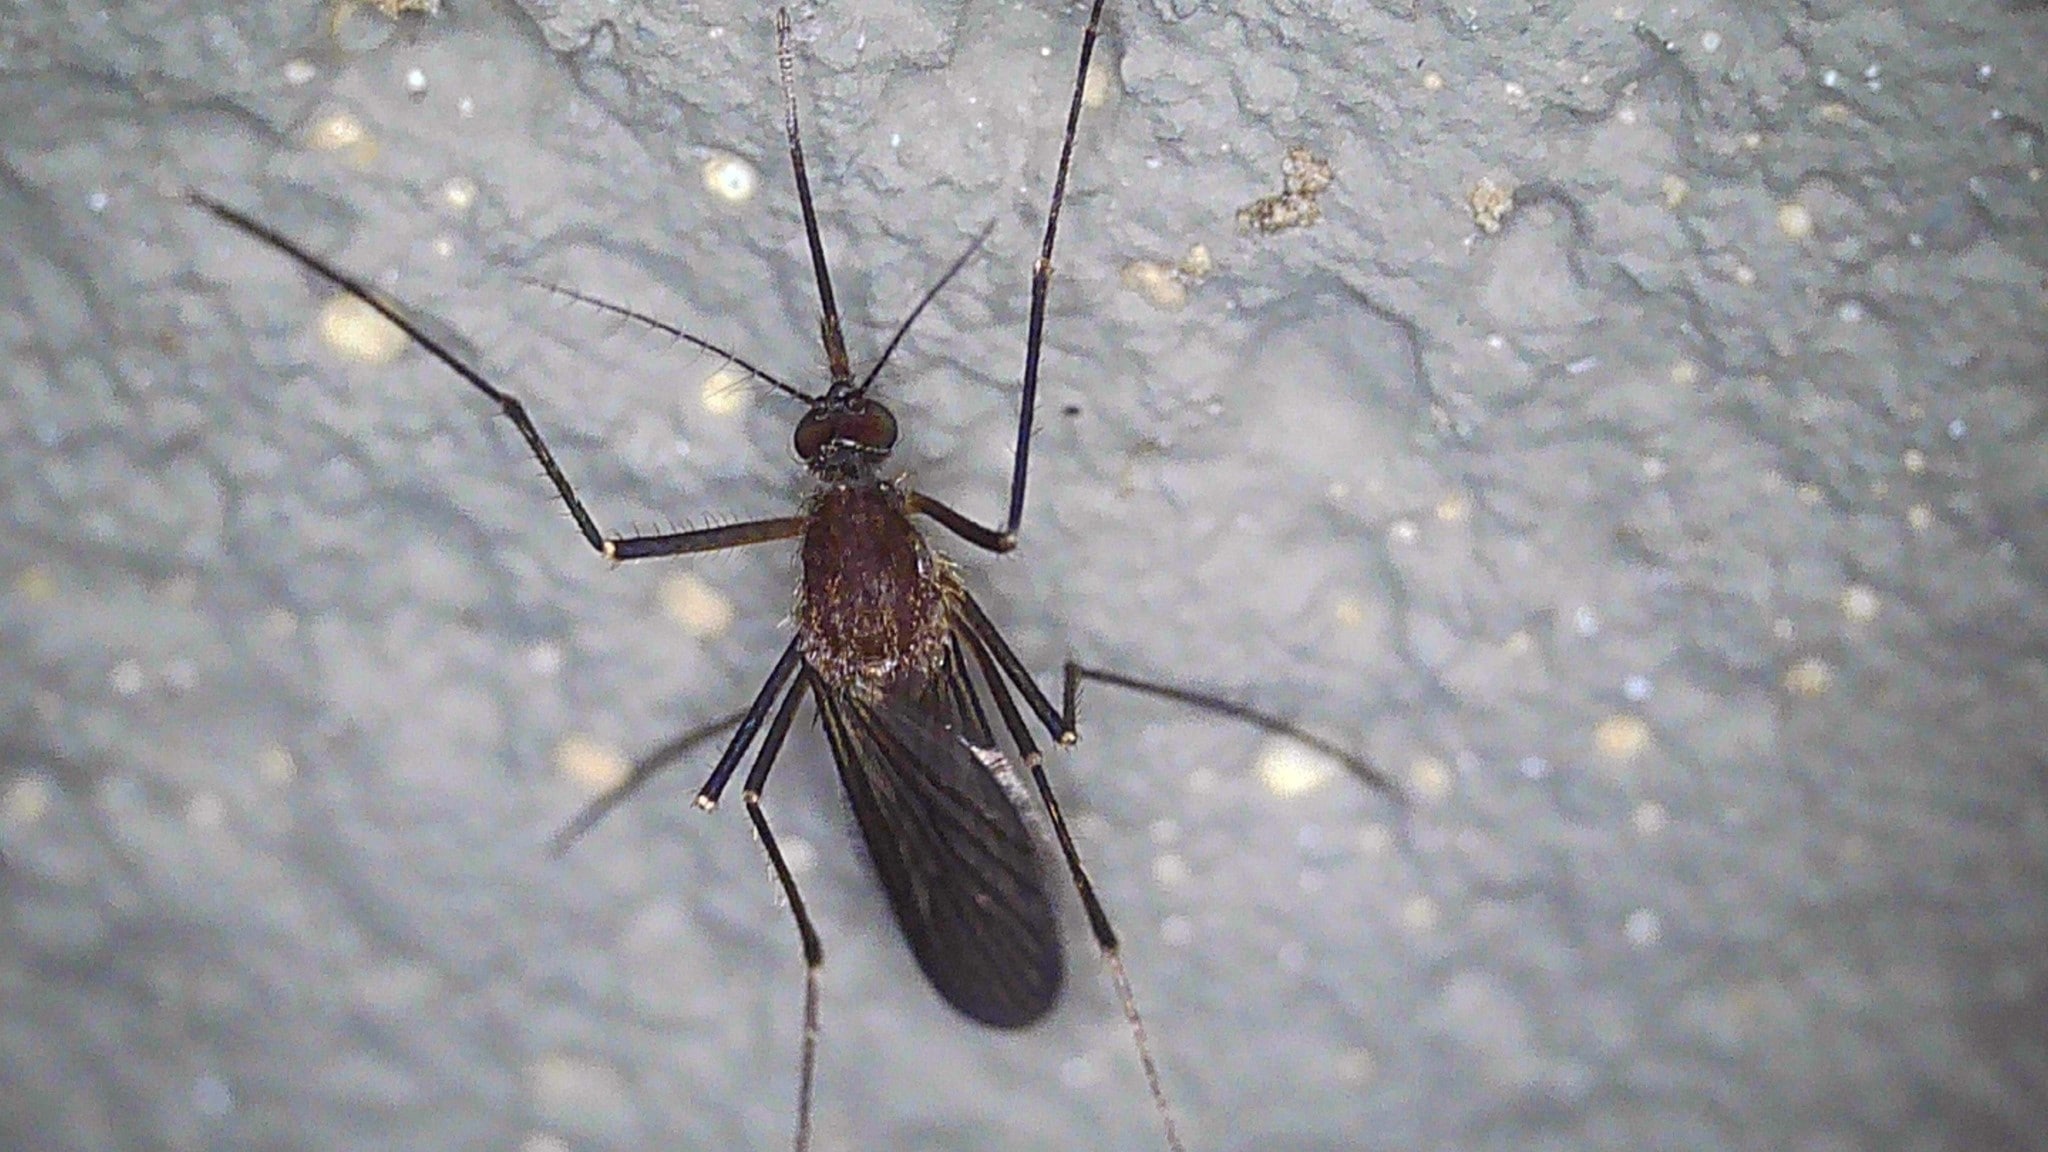 Culiseta melanura mosquito. Photo by Stephanie Campbell